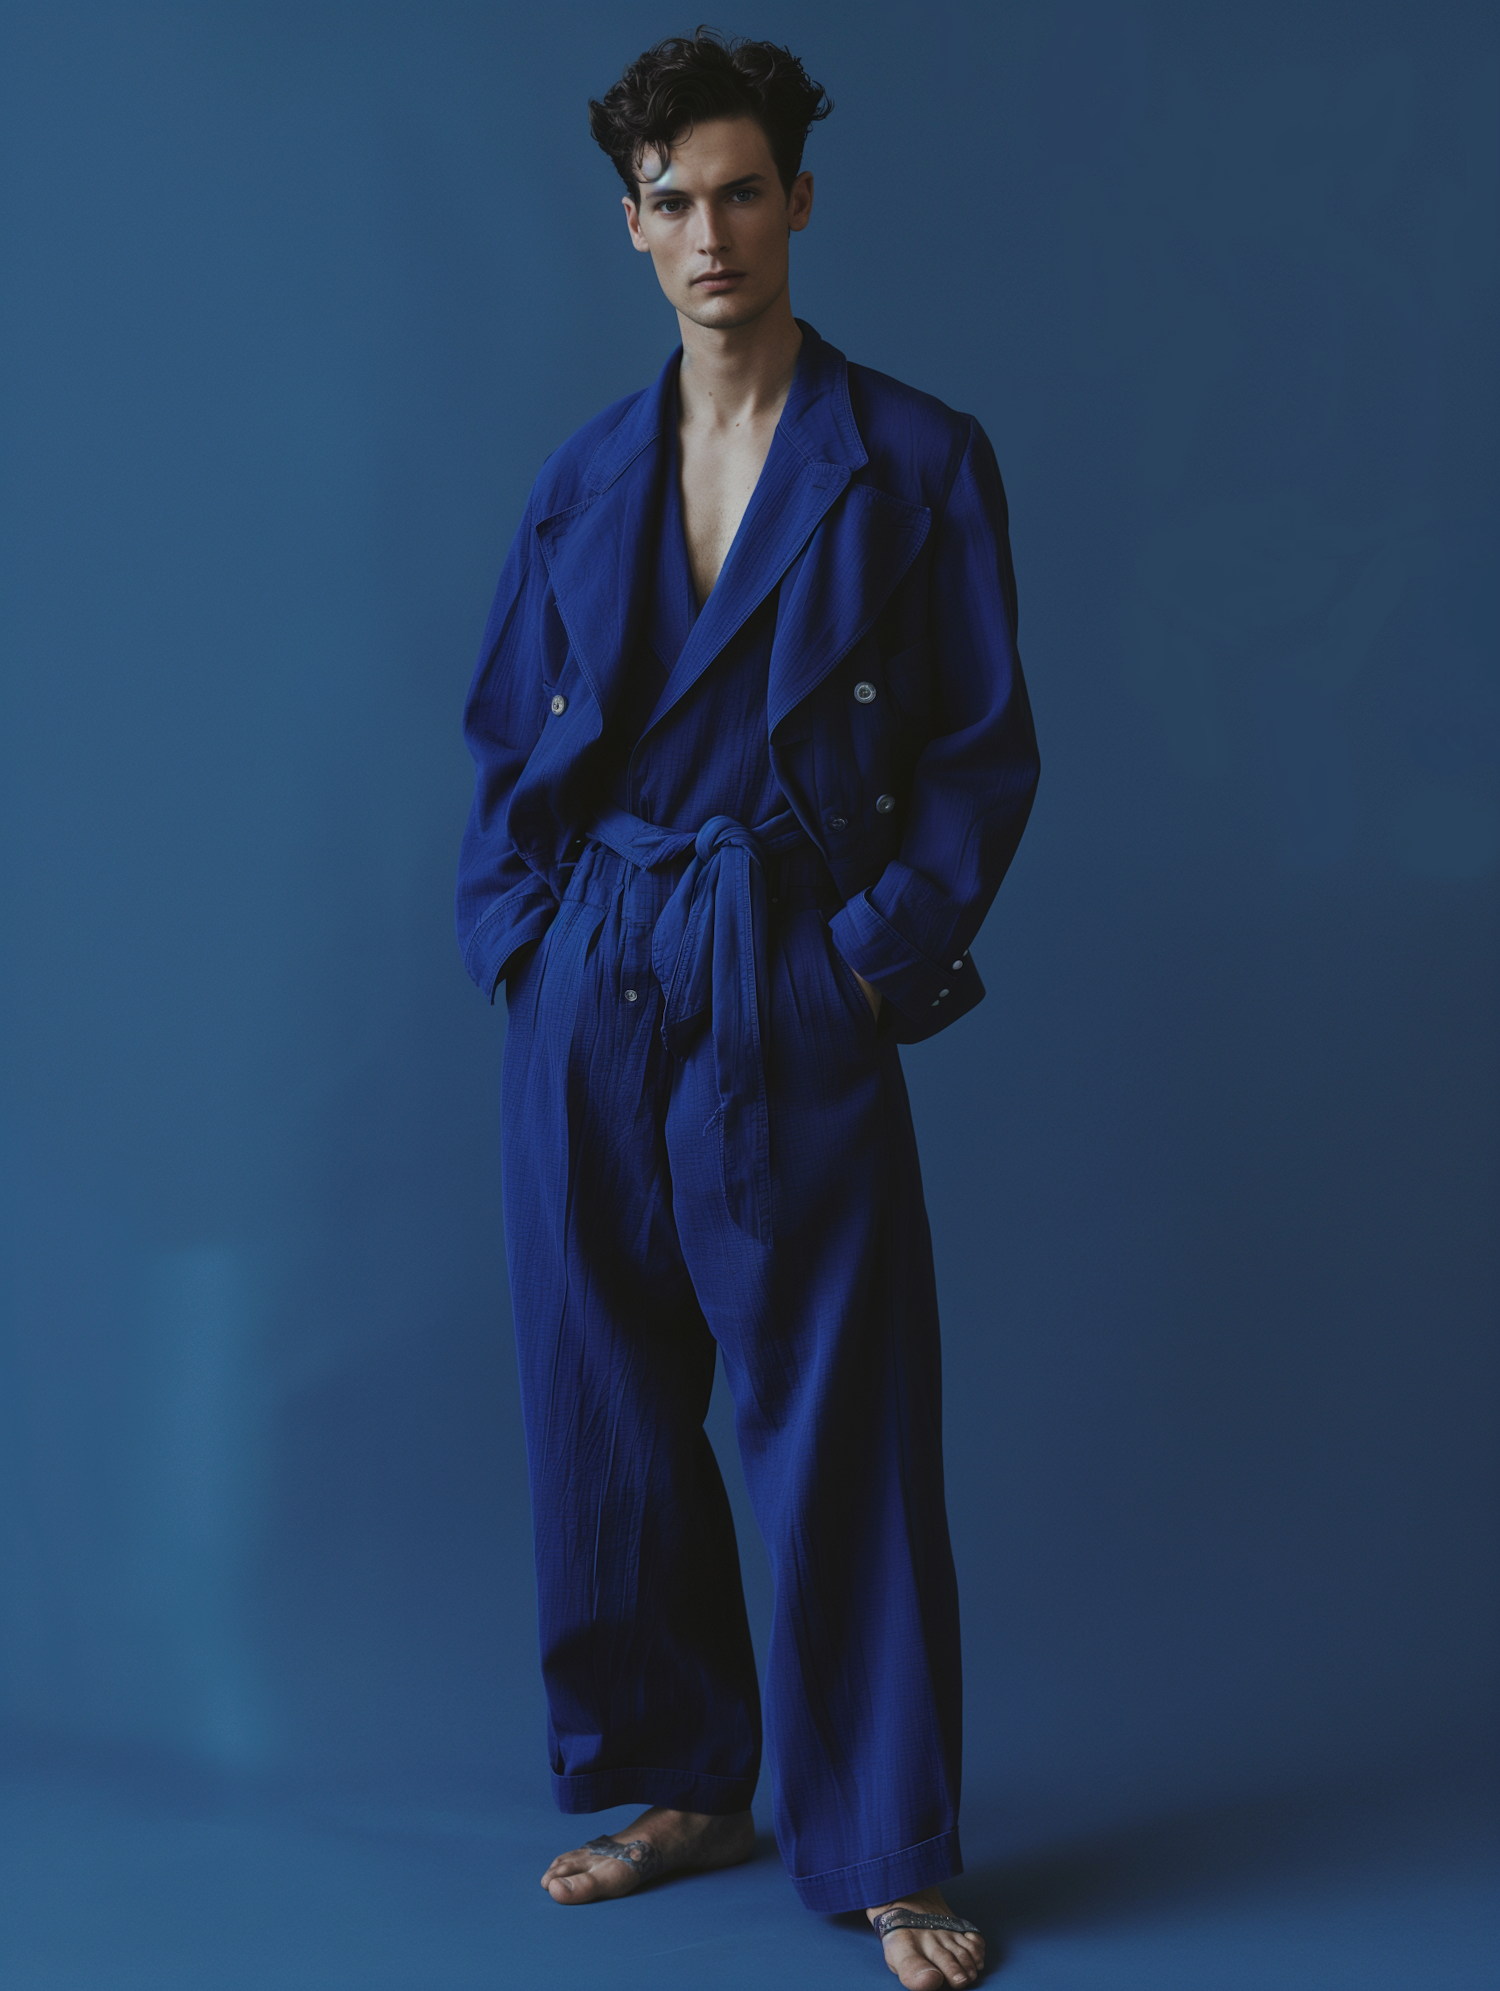 Blue Attire Fashion Portrait